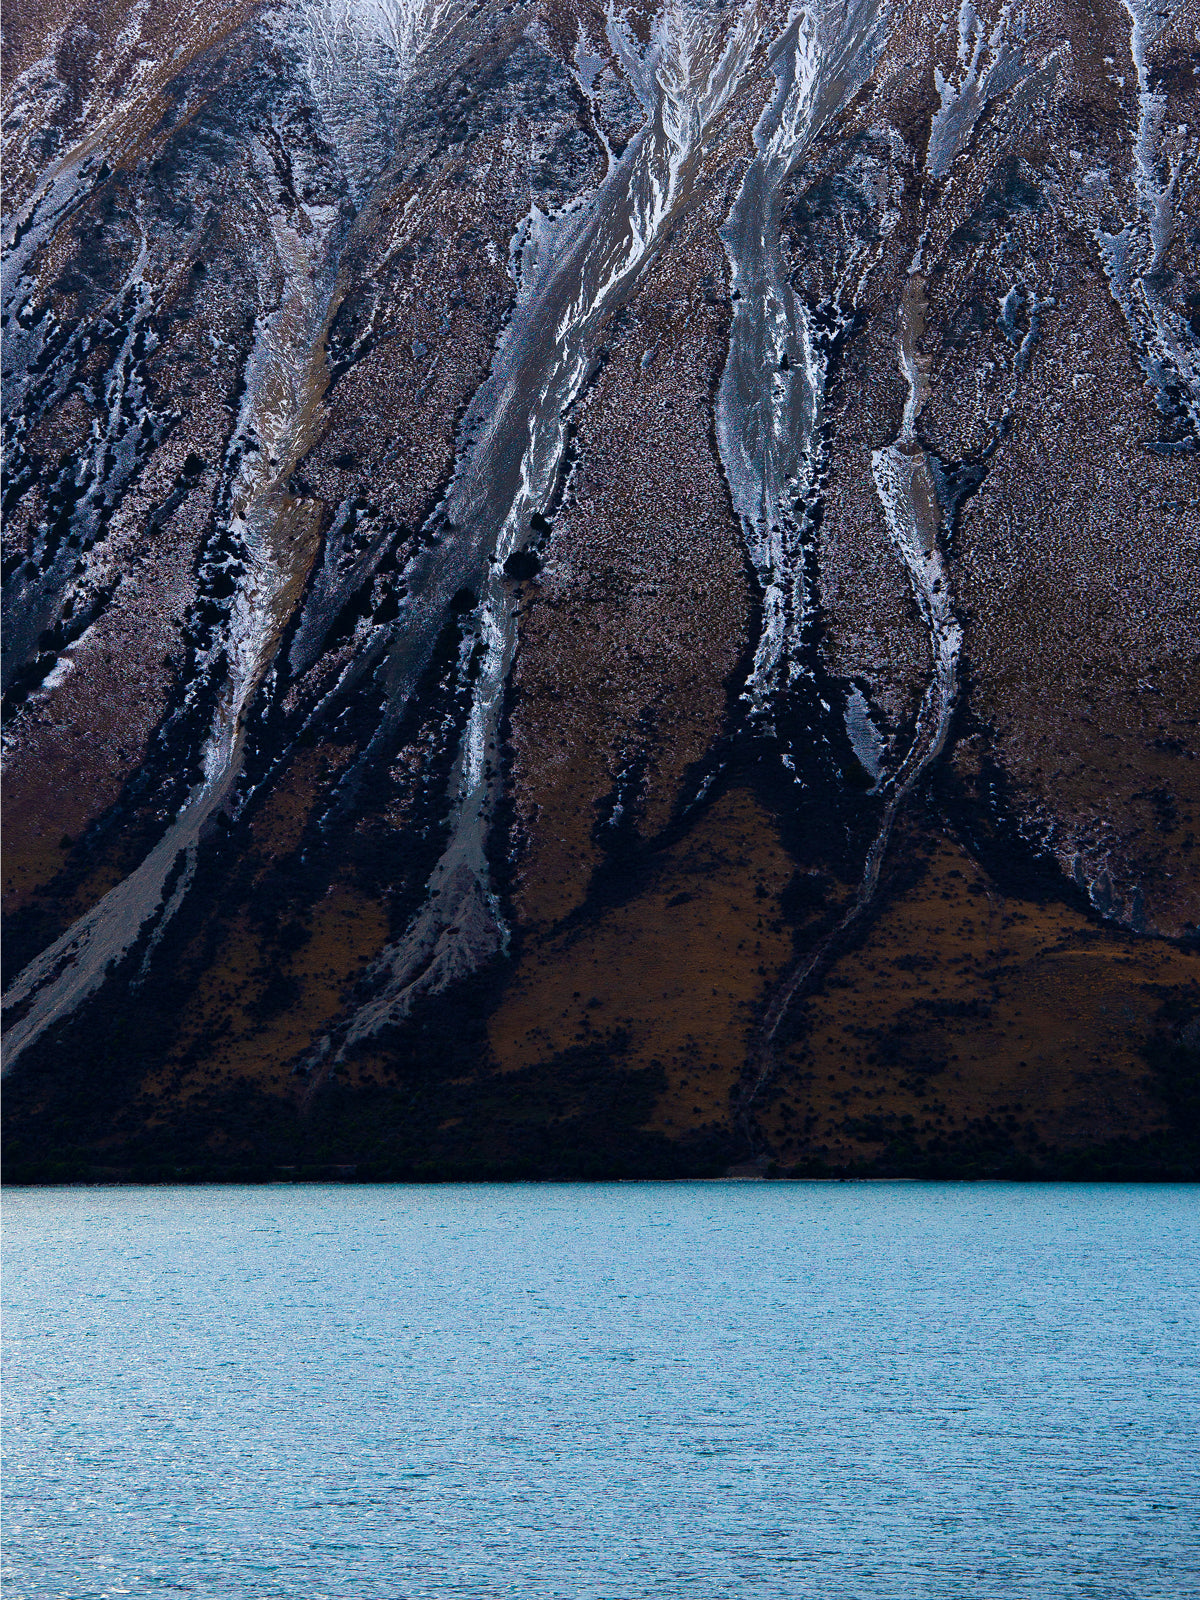 New Zealand Abstract Image of a Mountain at Lake Ohau